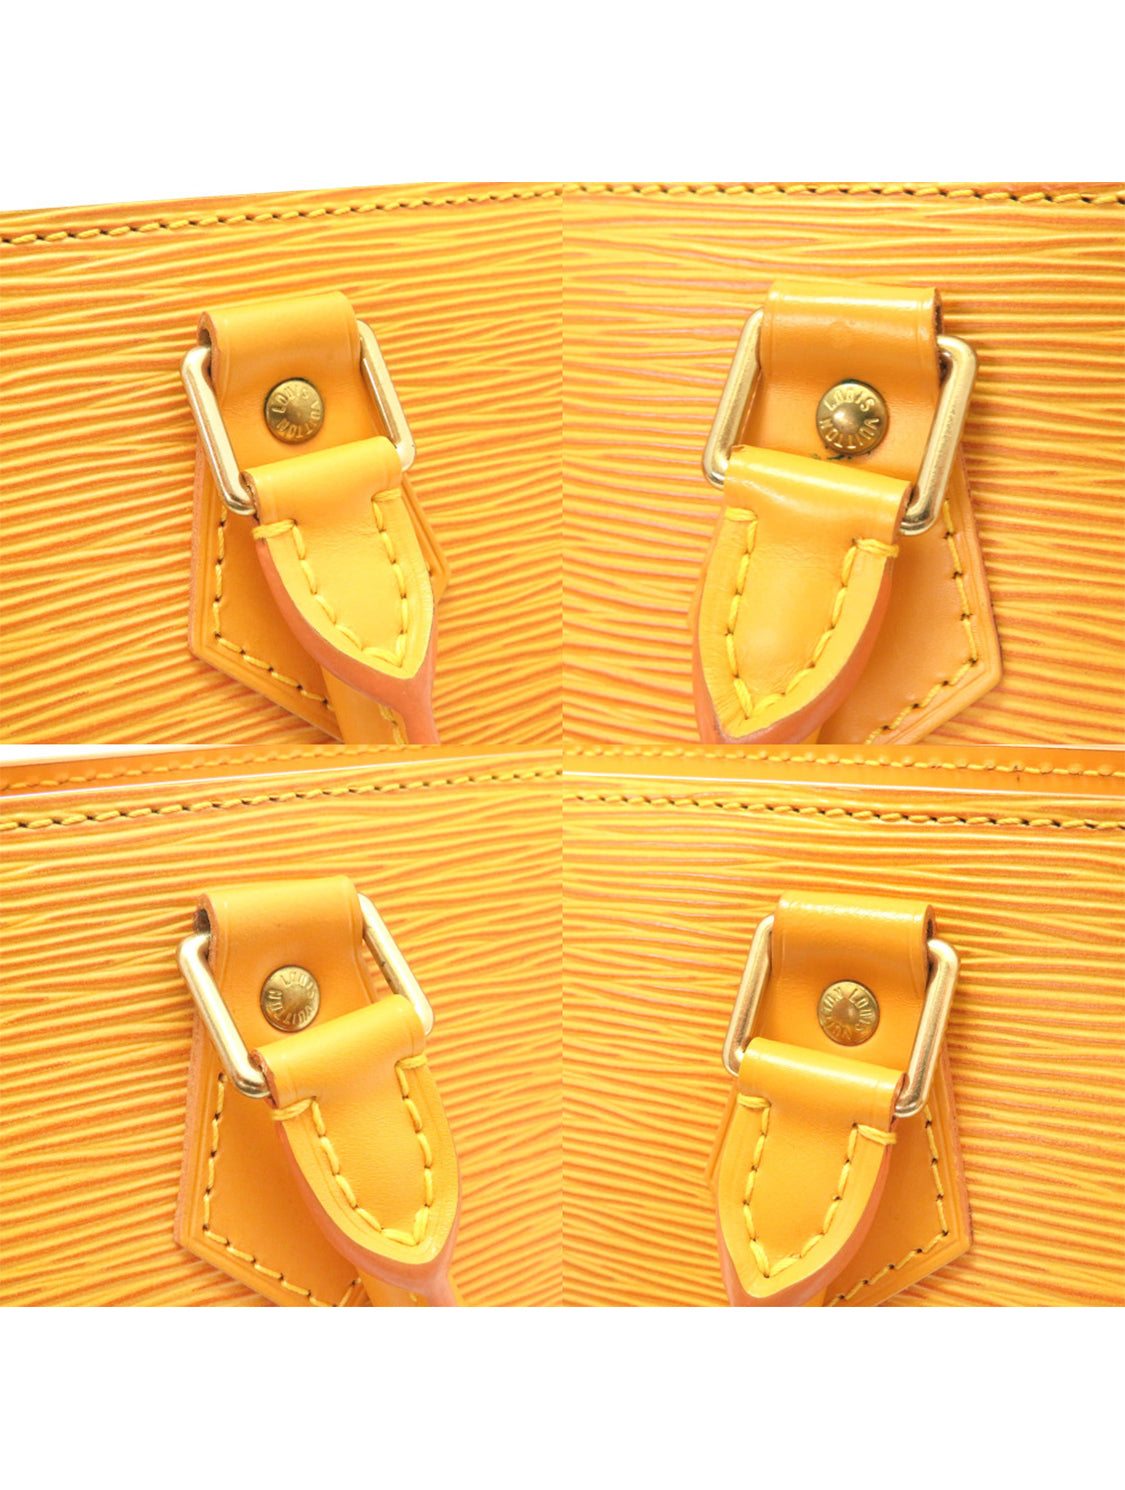 Louis Vuitton Tassil Yellow Epi Leather Petit Noe Bag Louis Vuitton